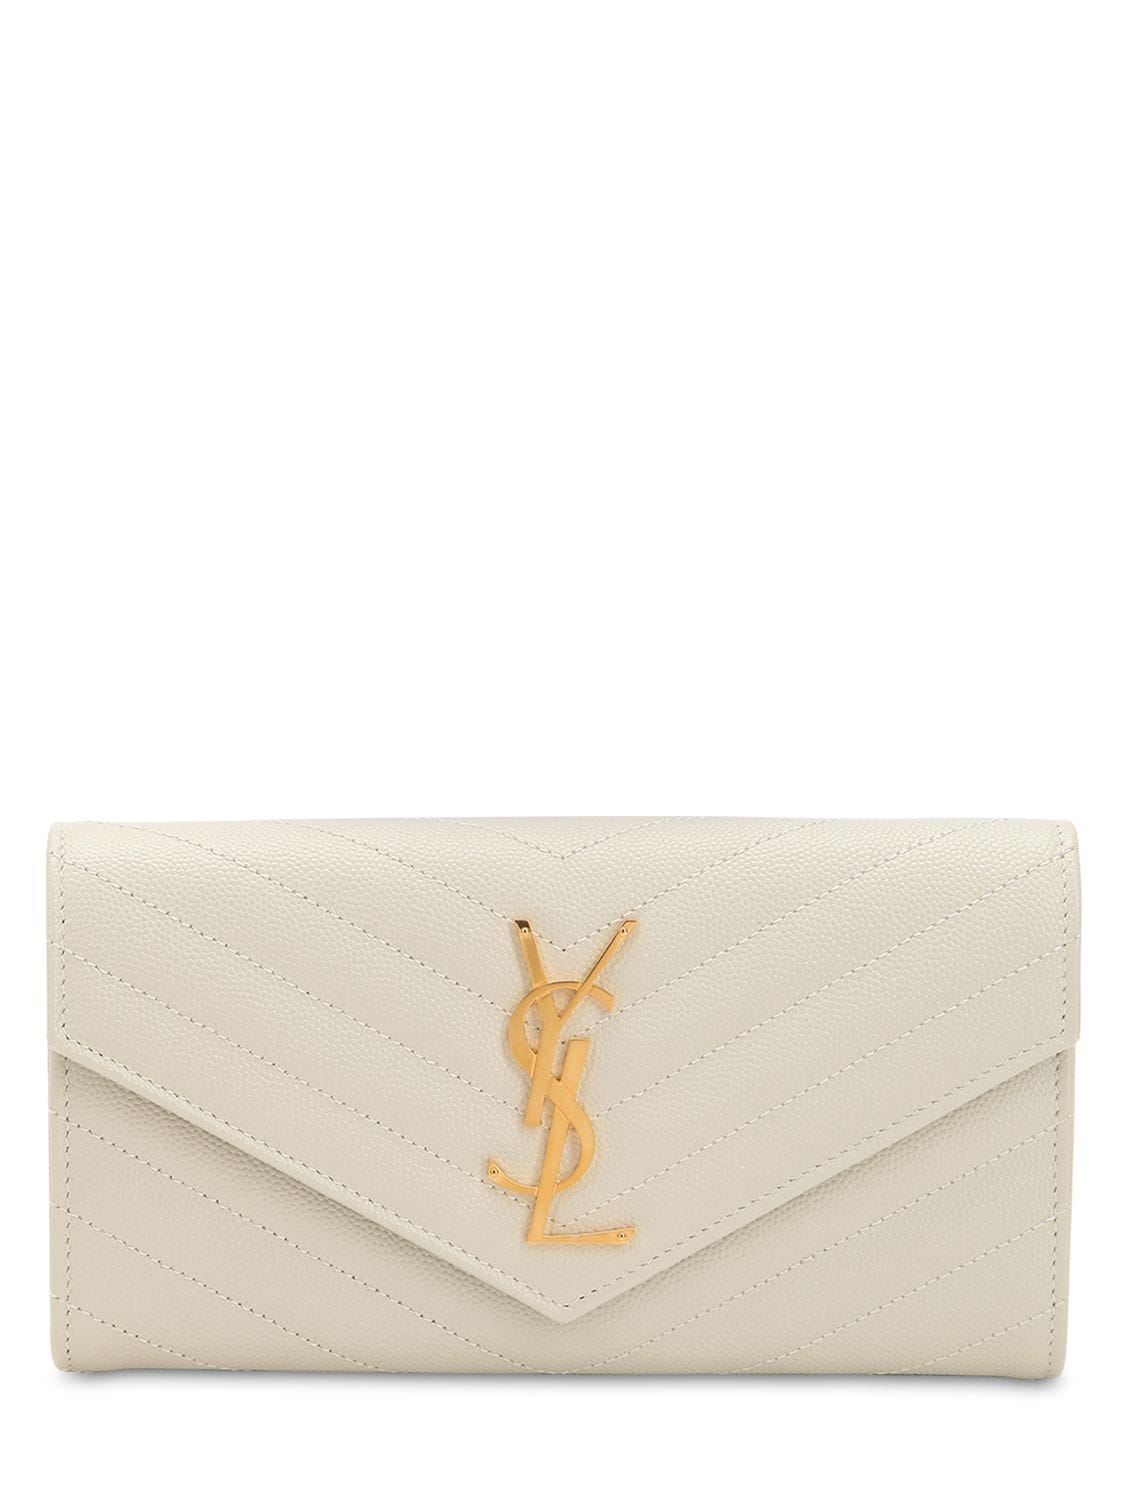 Saint Laurent Large Monogram Quilted Leather Wallet In Blanc Vintage